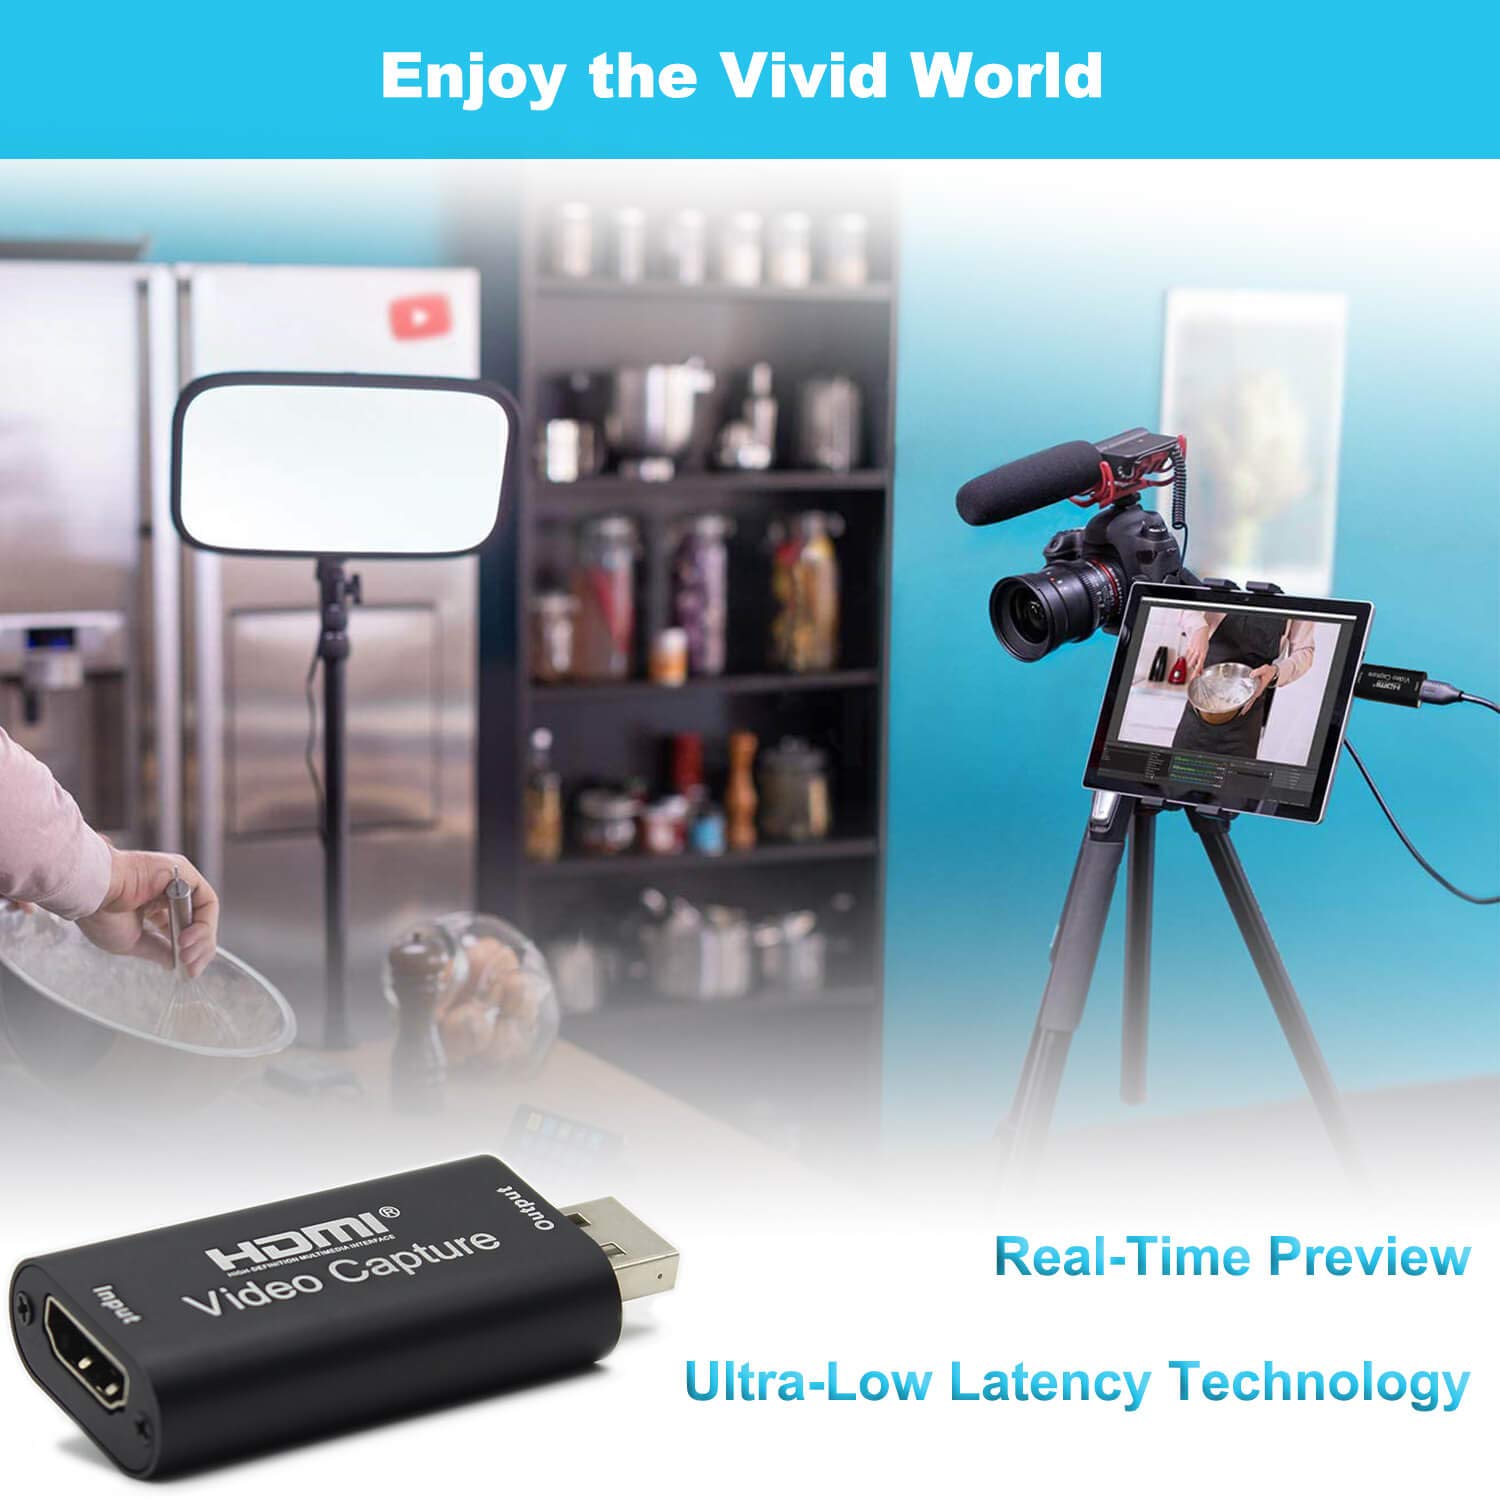 BlueAVS HDMI to USB Video Capture Card 1080P for Live Video Streaming Record via DSLR Camcorder Action Cam - Capture 1080P@30Hz (Metal-Black)